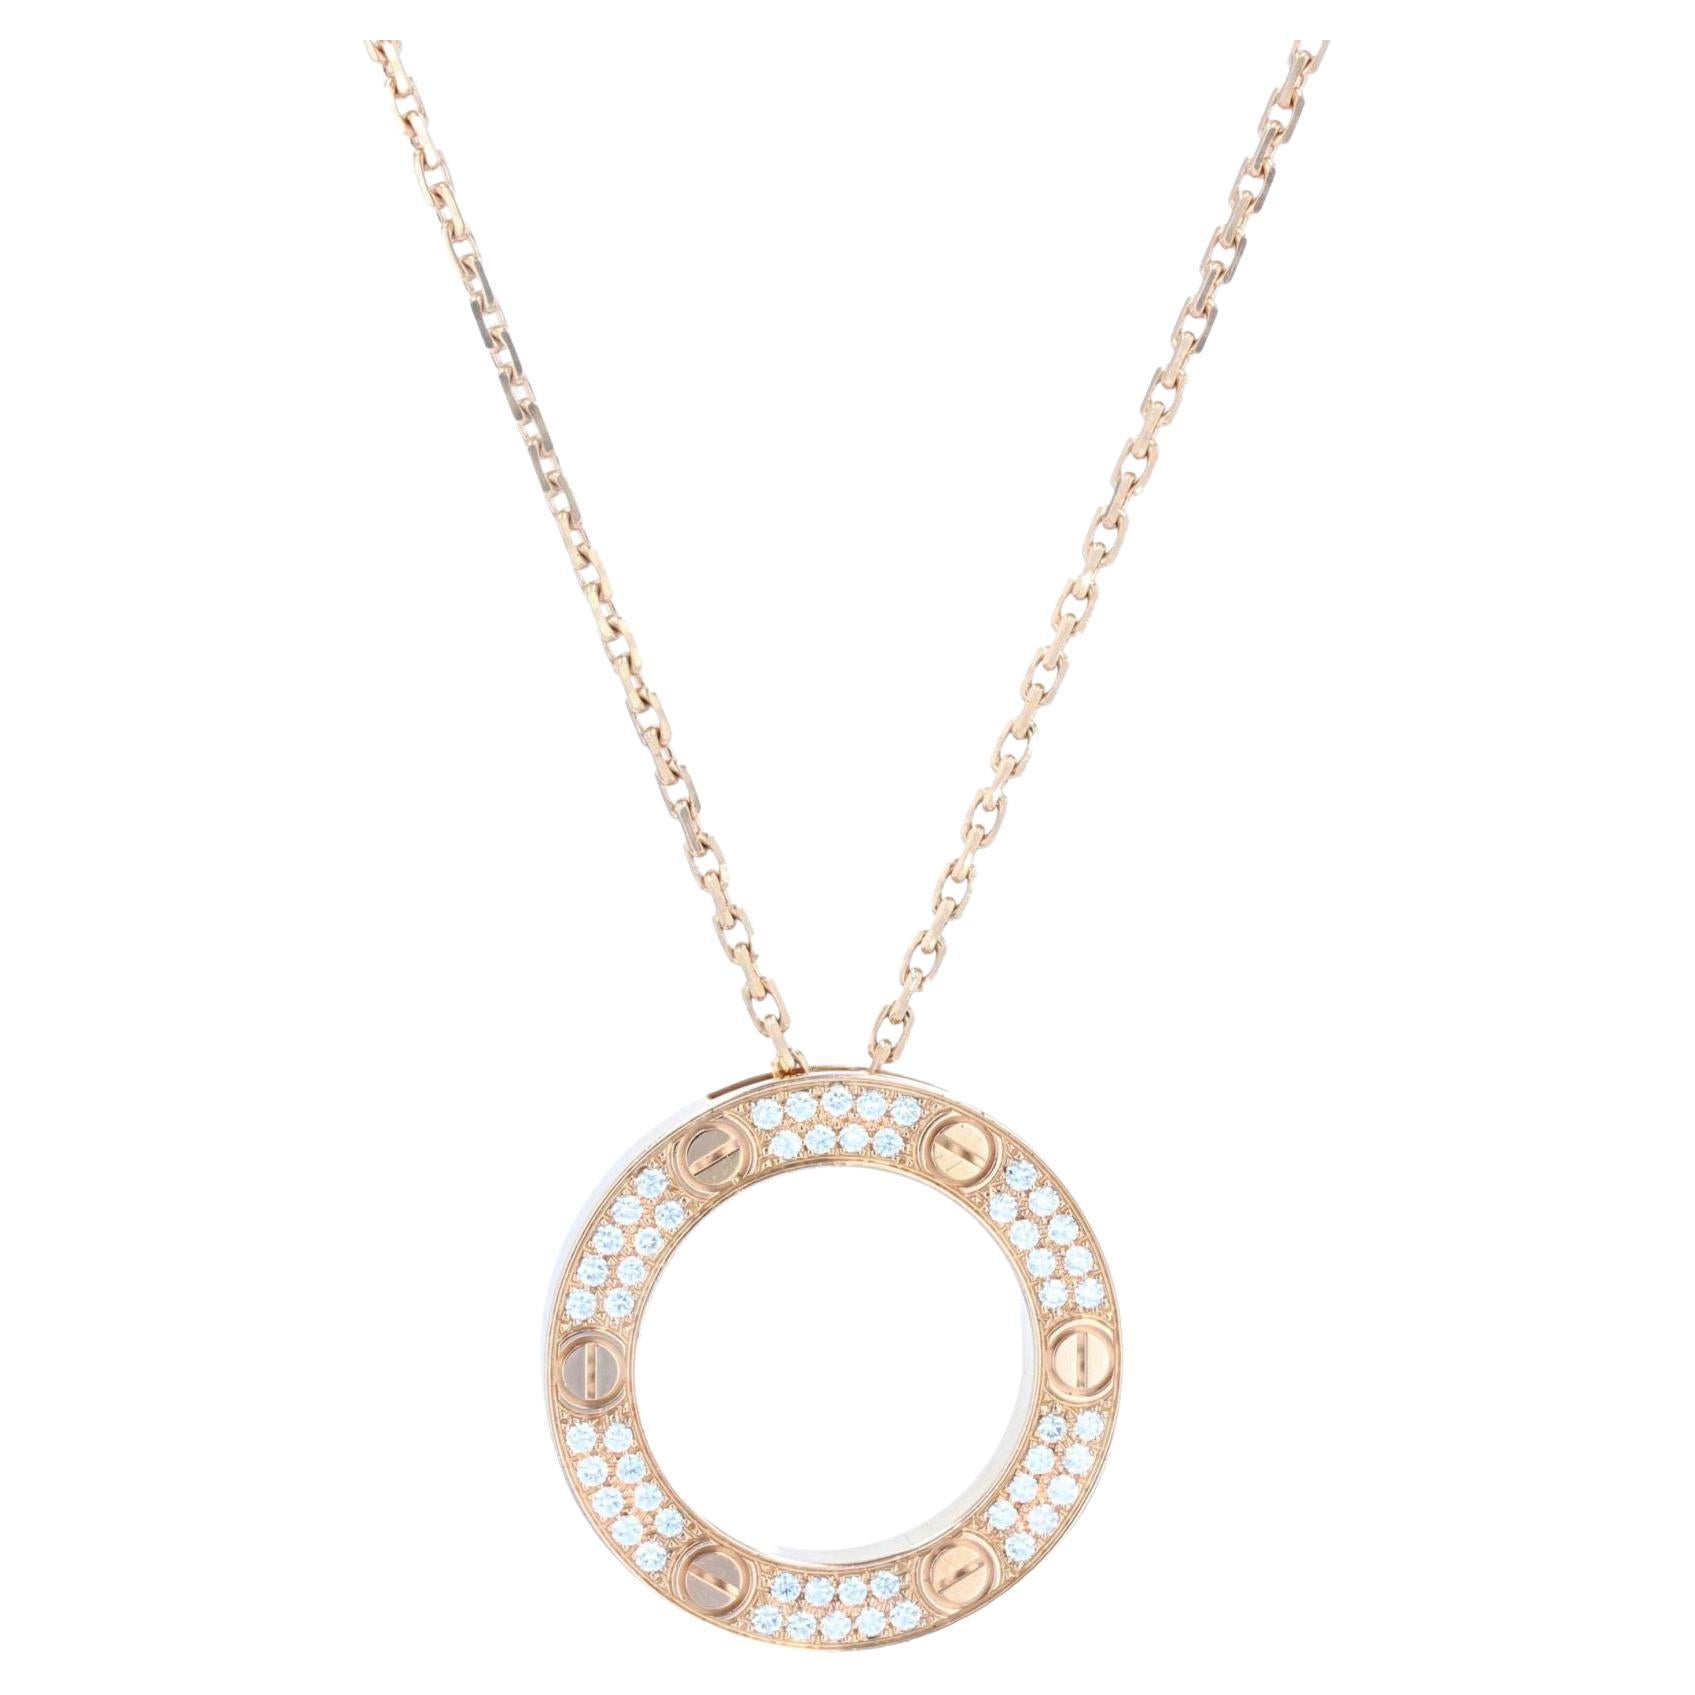 Cartier Love Pavé Diamonds 18 Karats Rose Gold Pendant Necklace